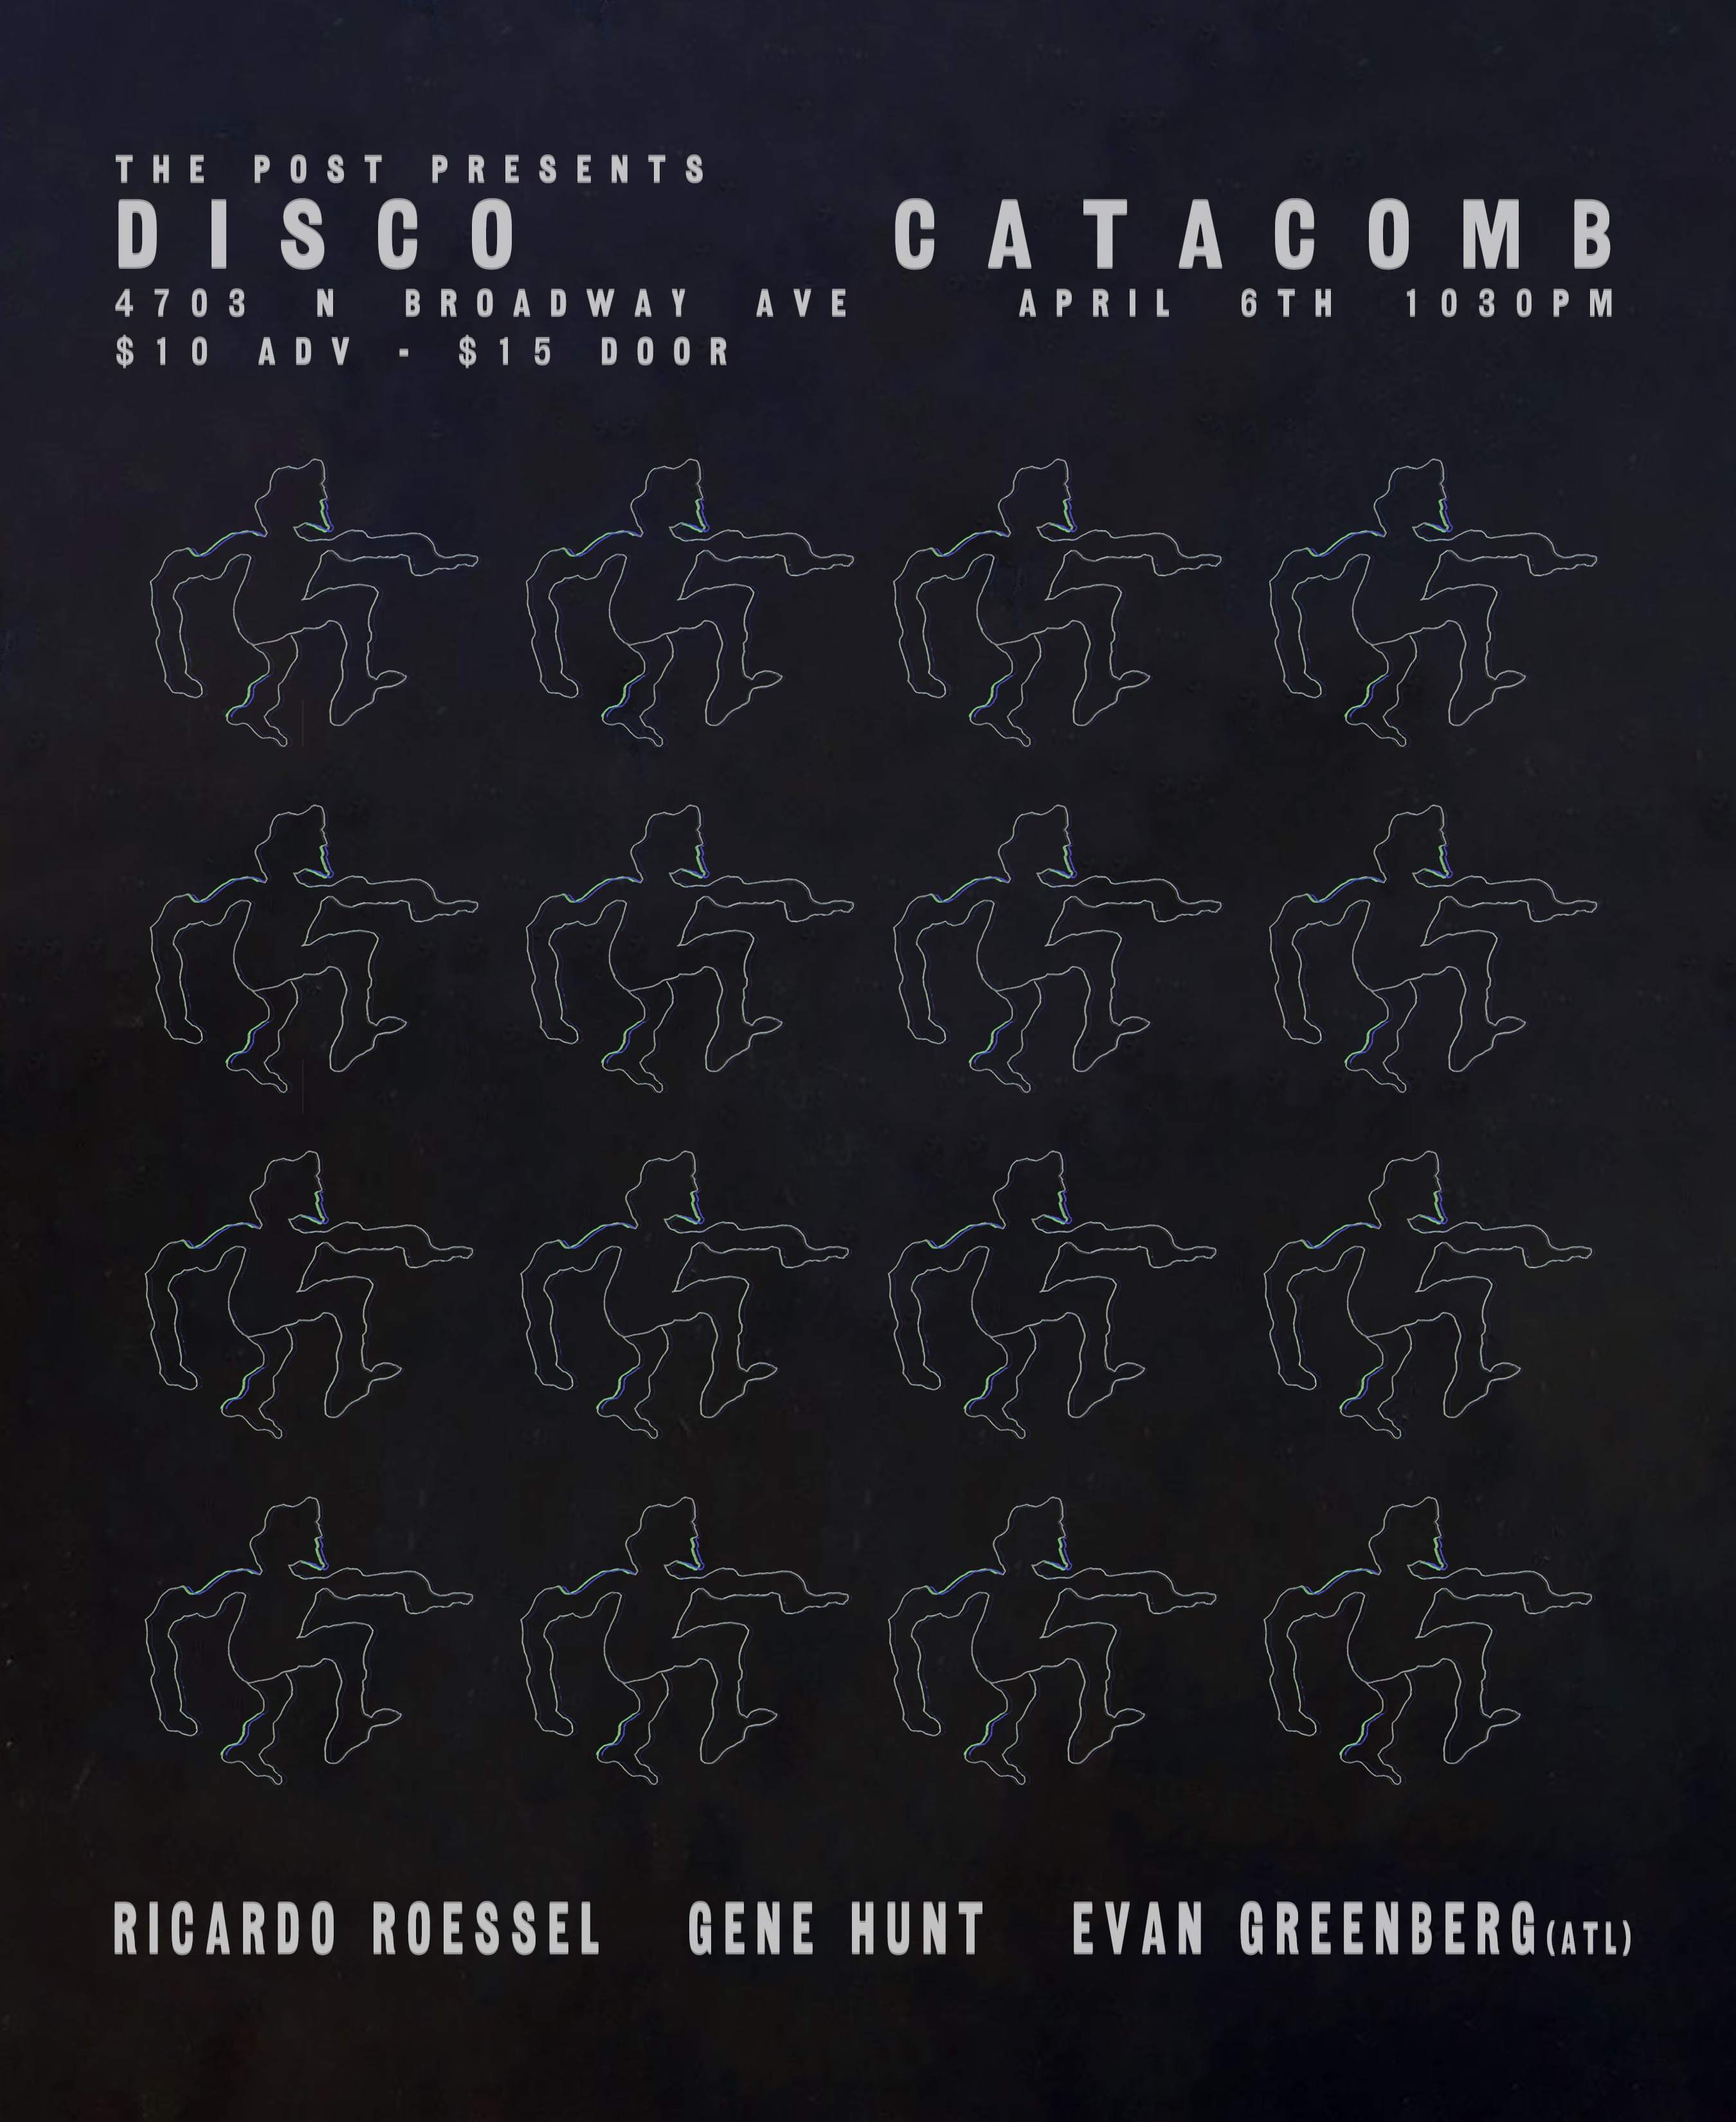 The Post presents: Disco Catacomb - フライヤー表